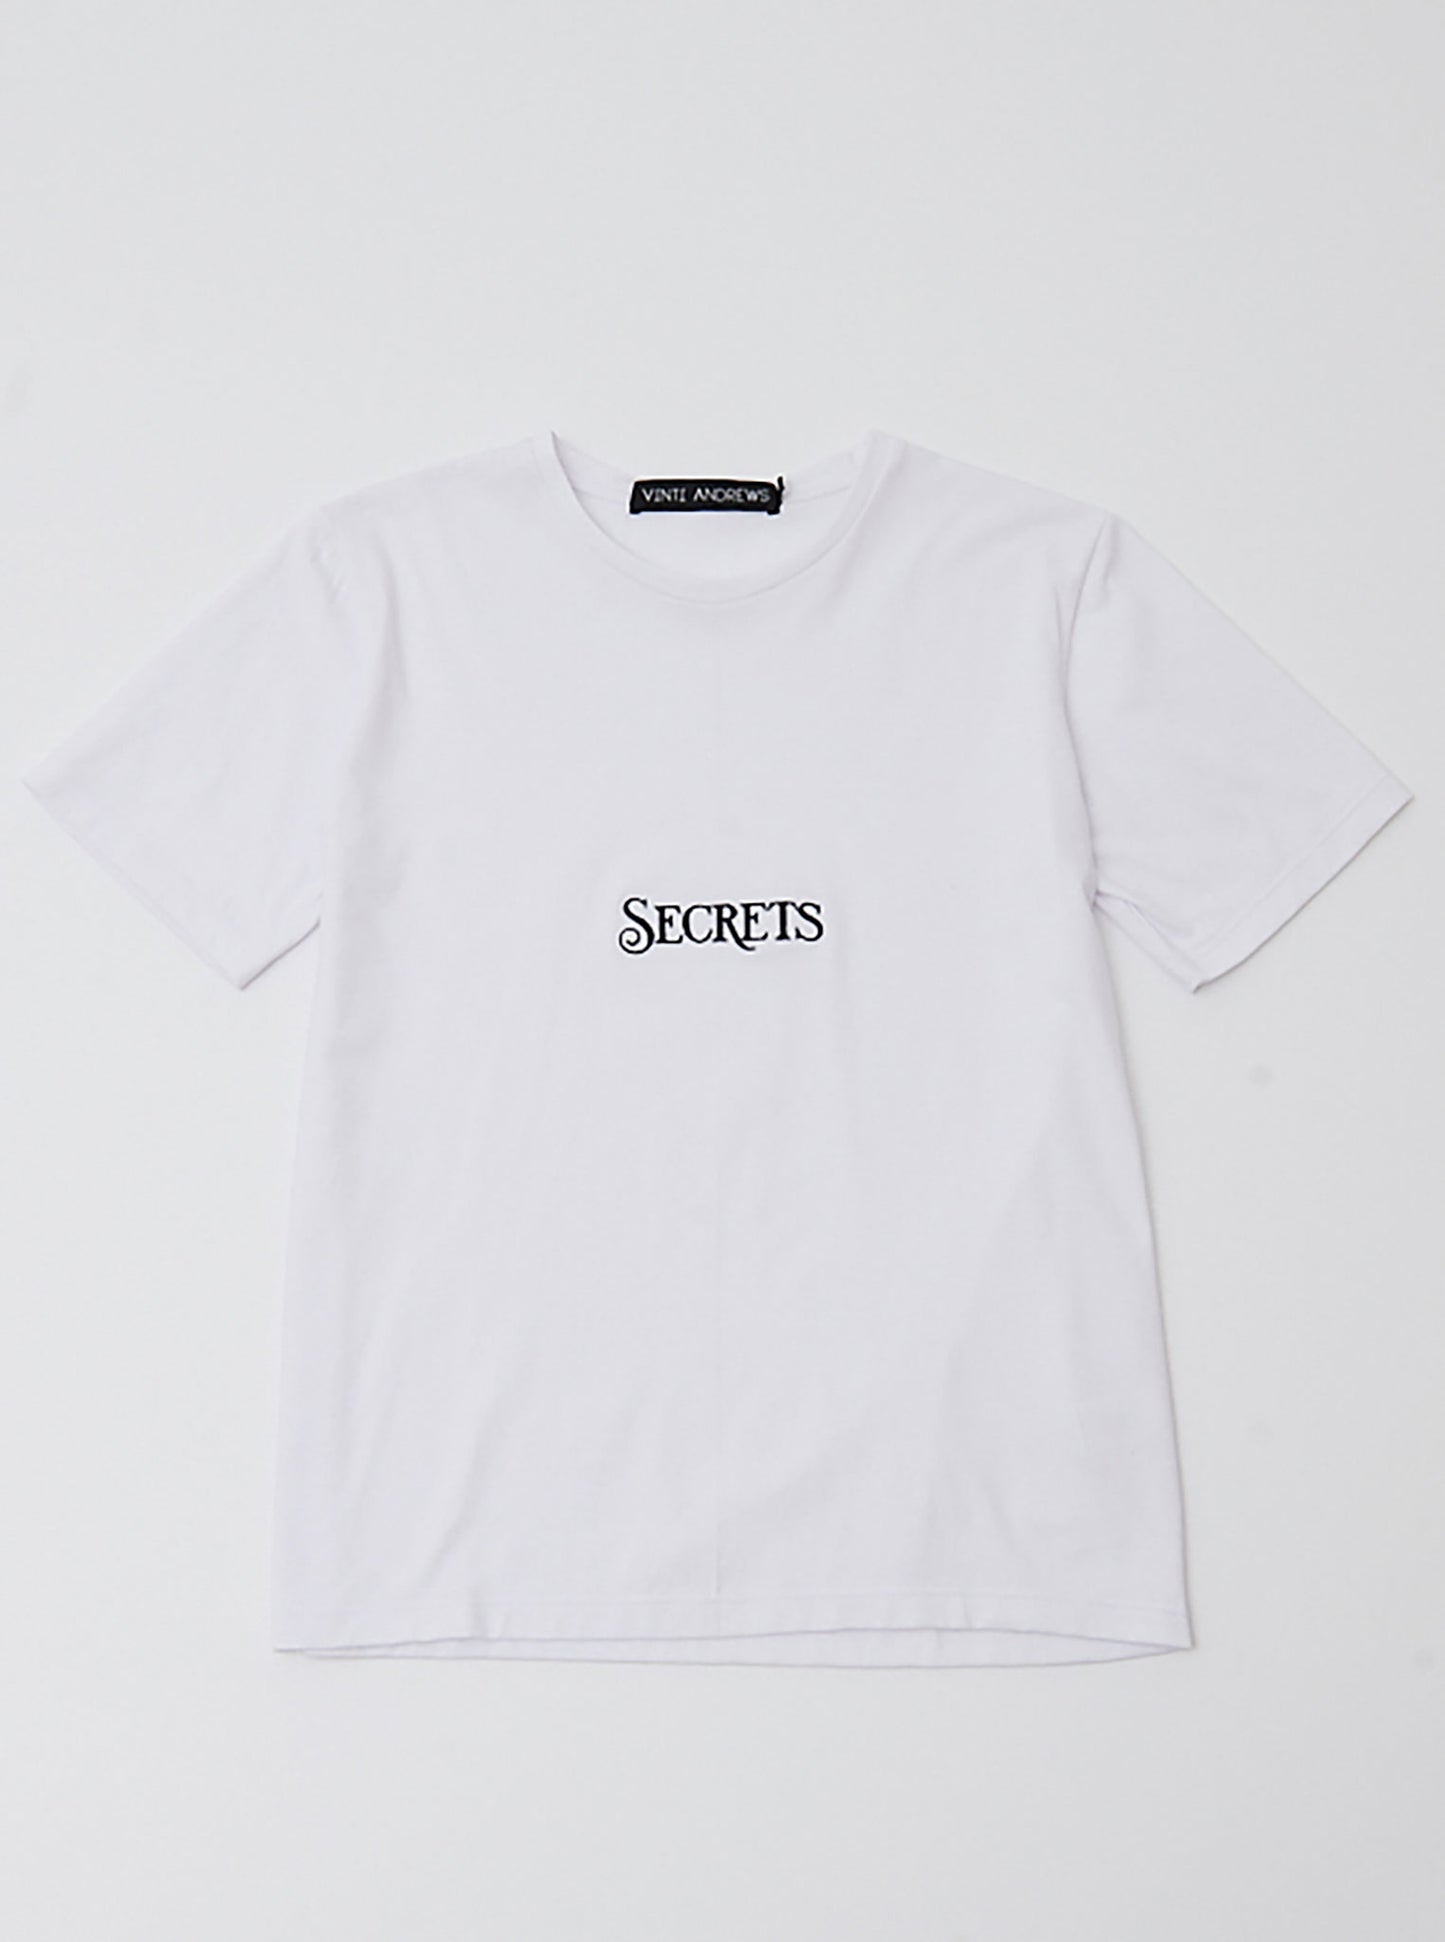 Vinti Andrews Secret Embroidery Girl White T-Shirt